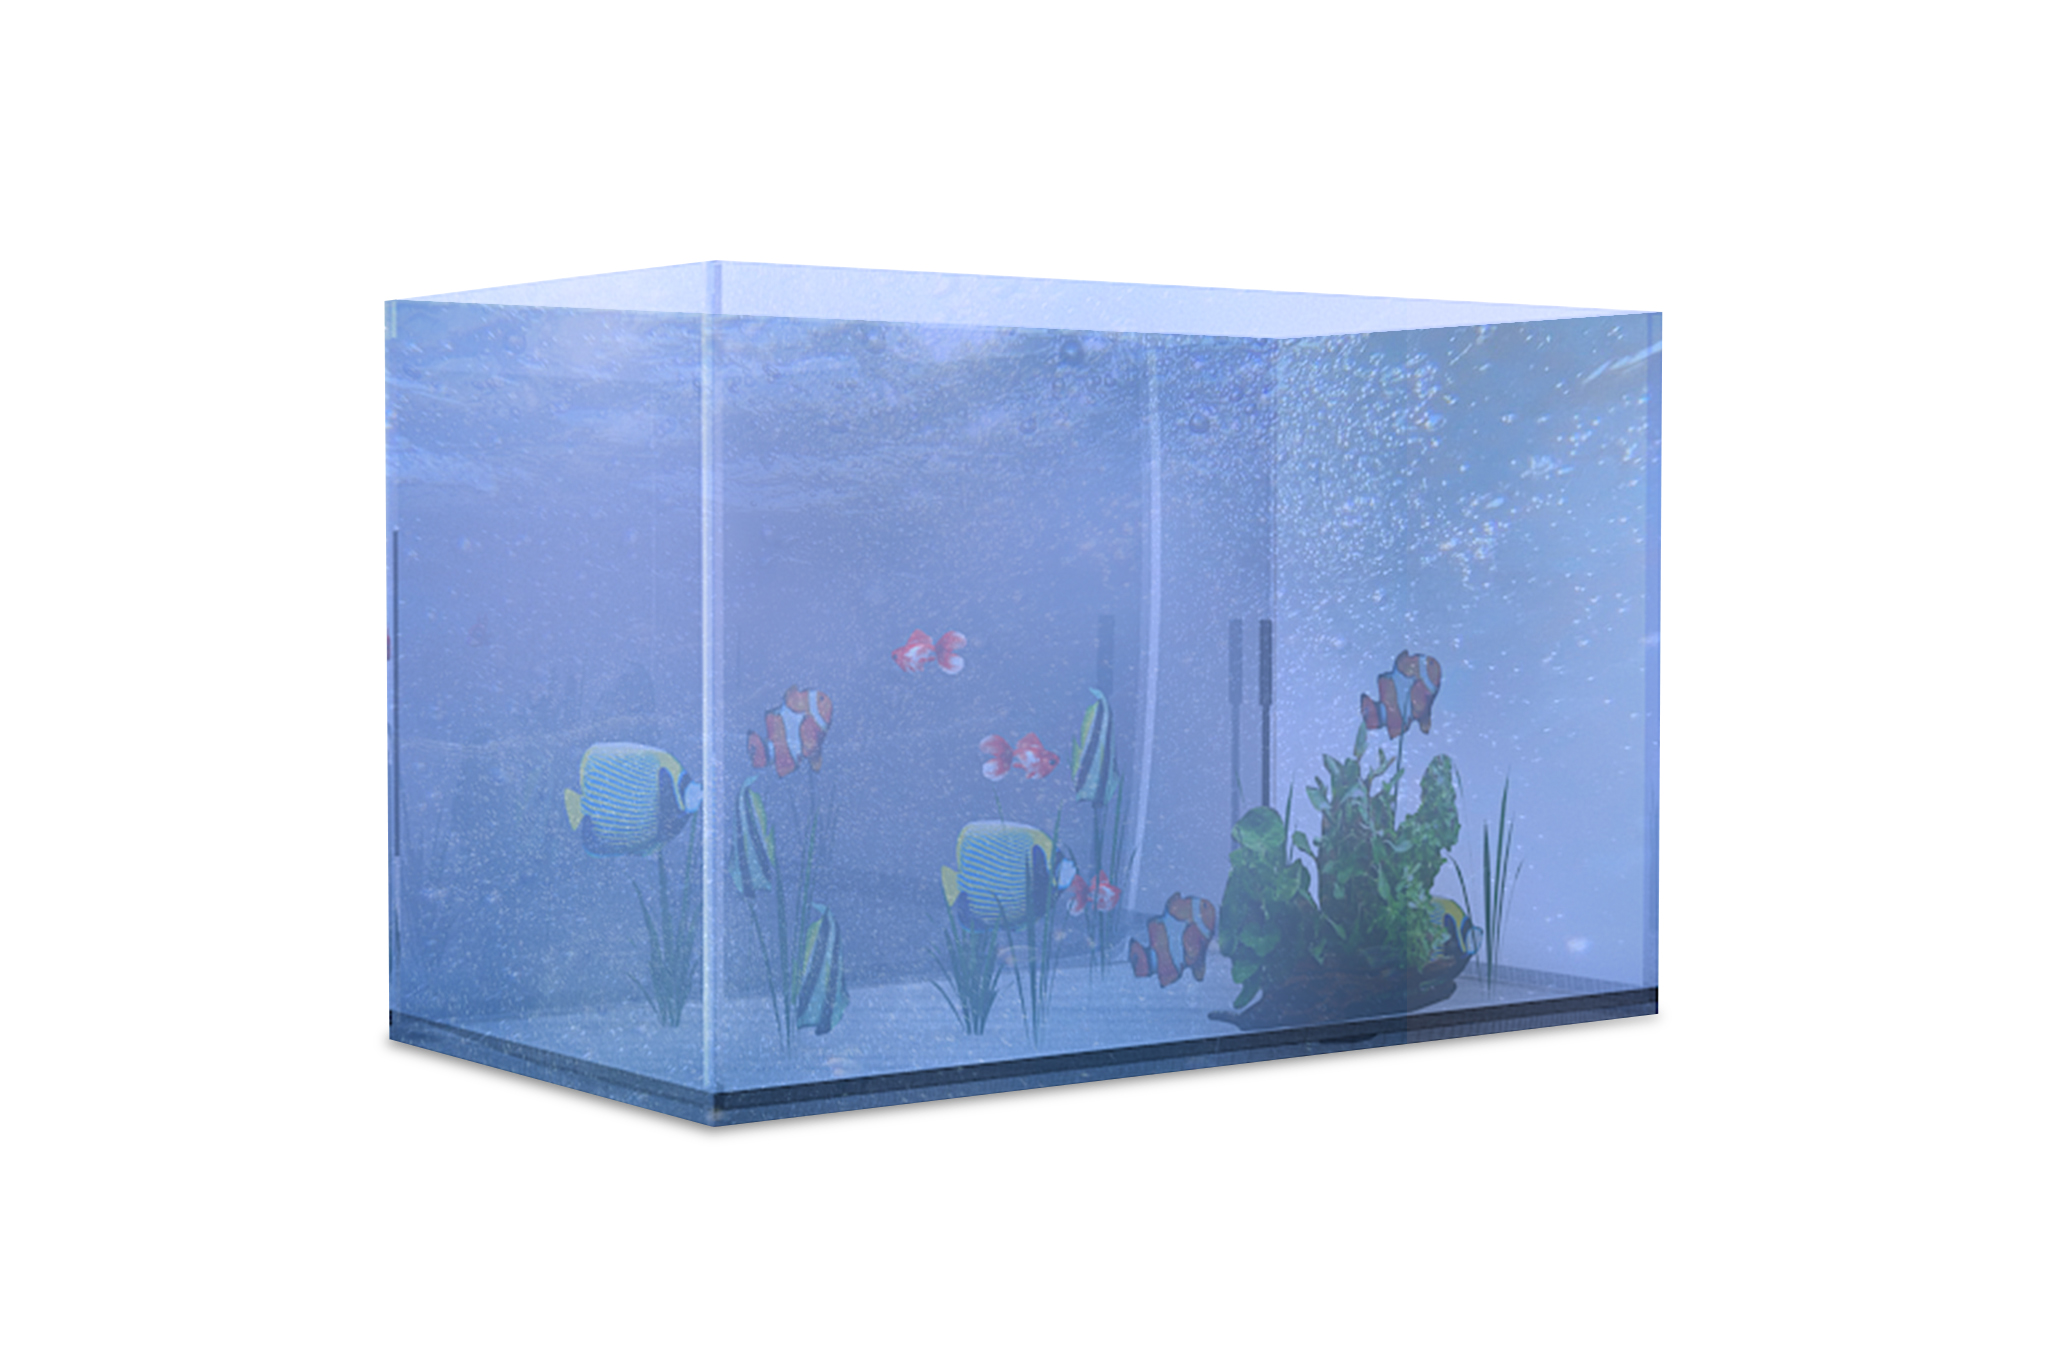 Fish Tank Aquarium - Large - Top-Works Glass and Aluminum